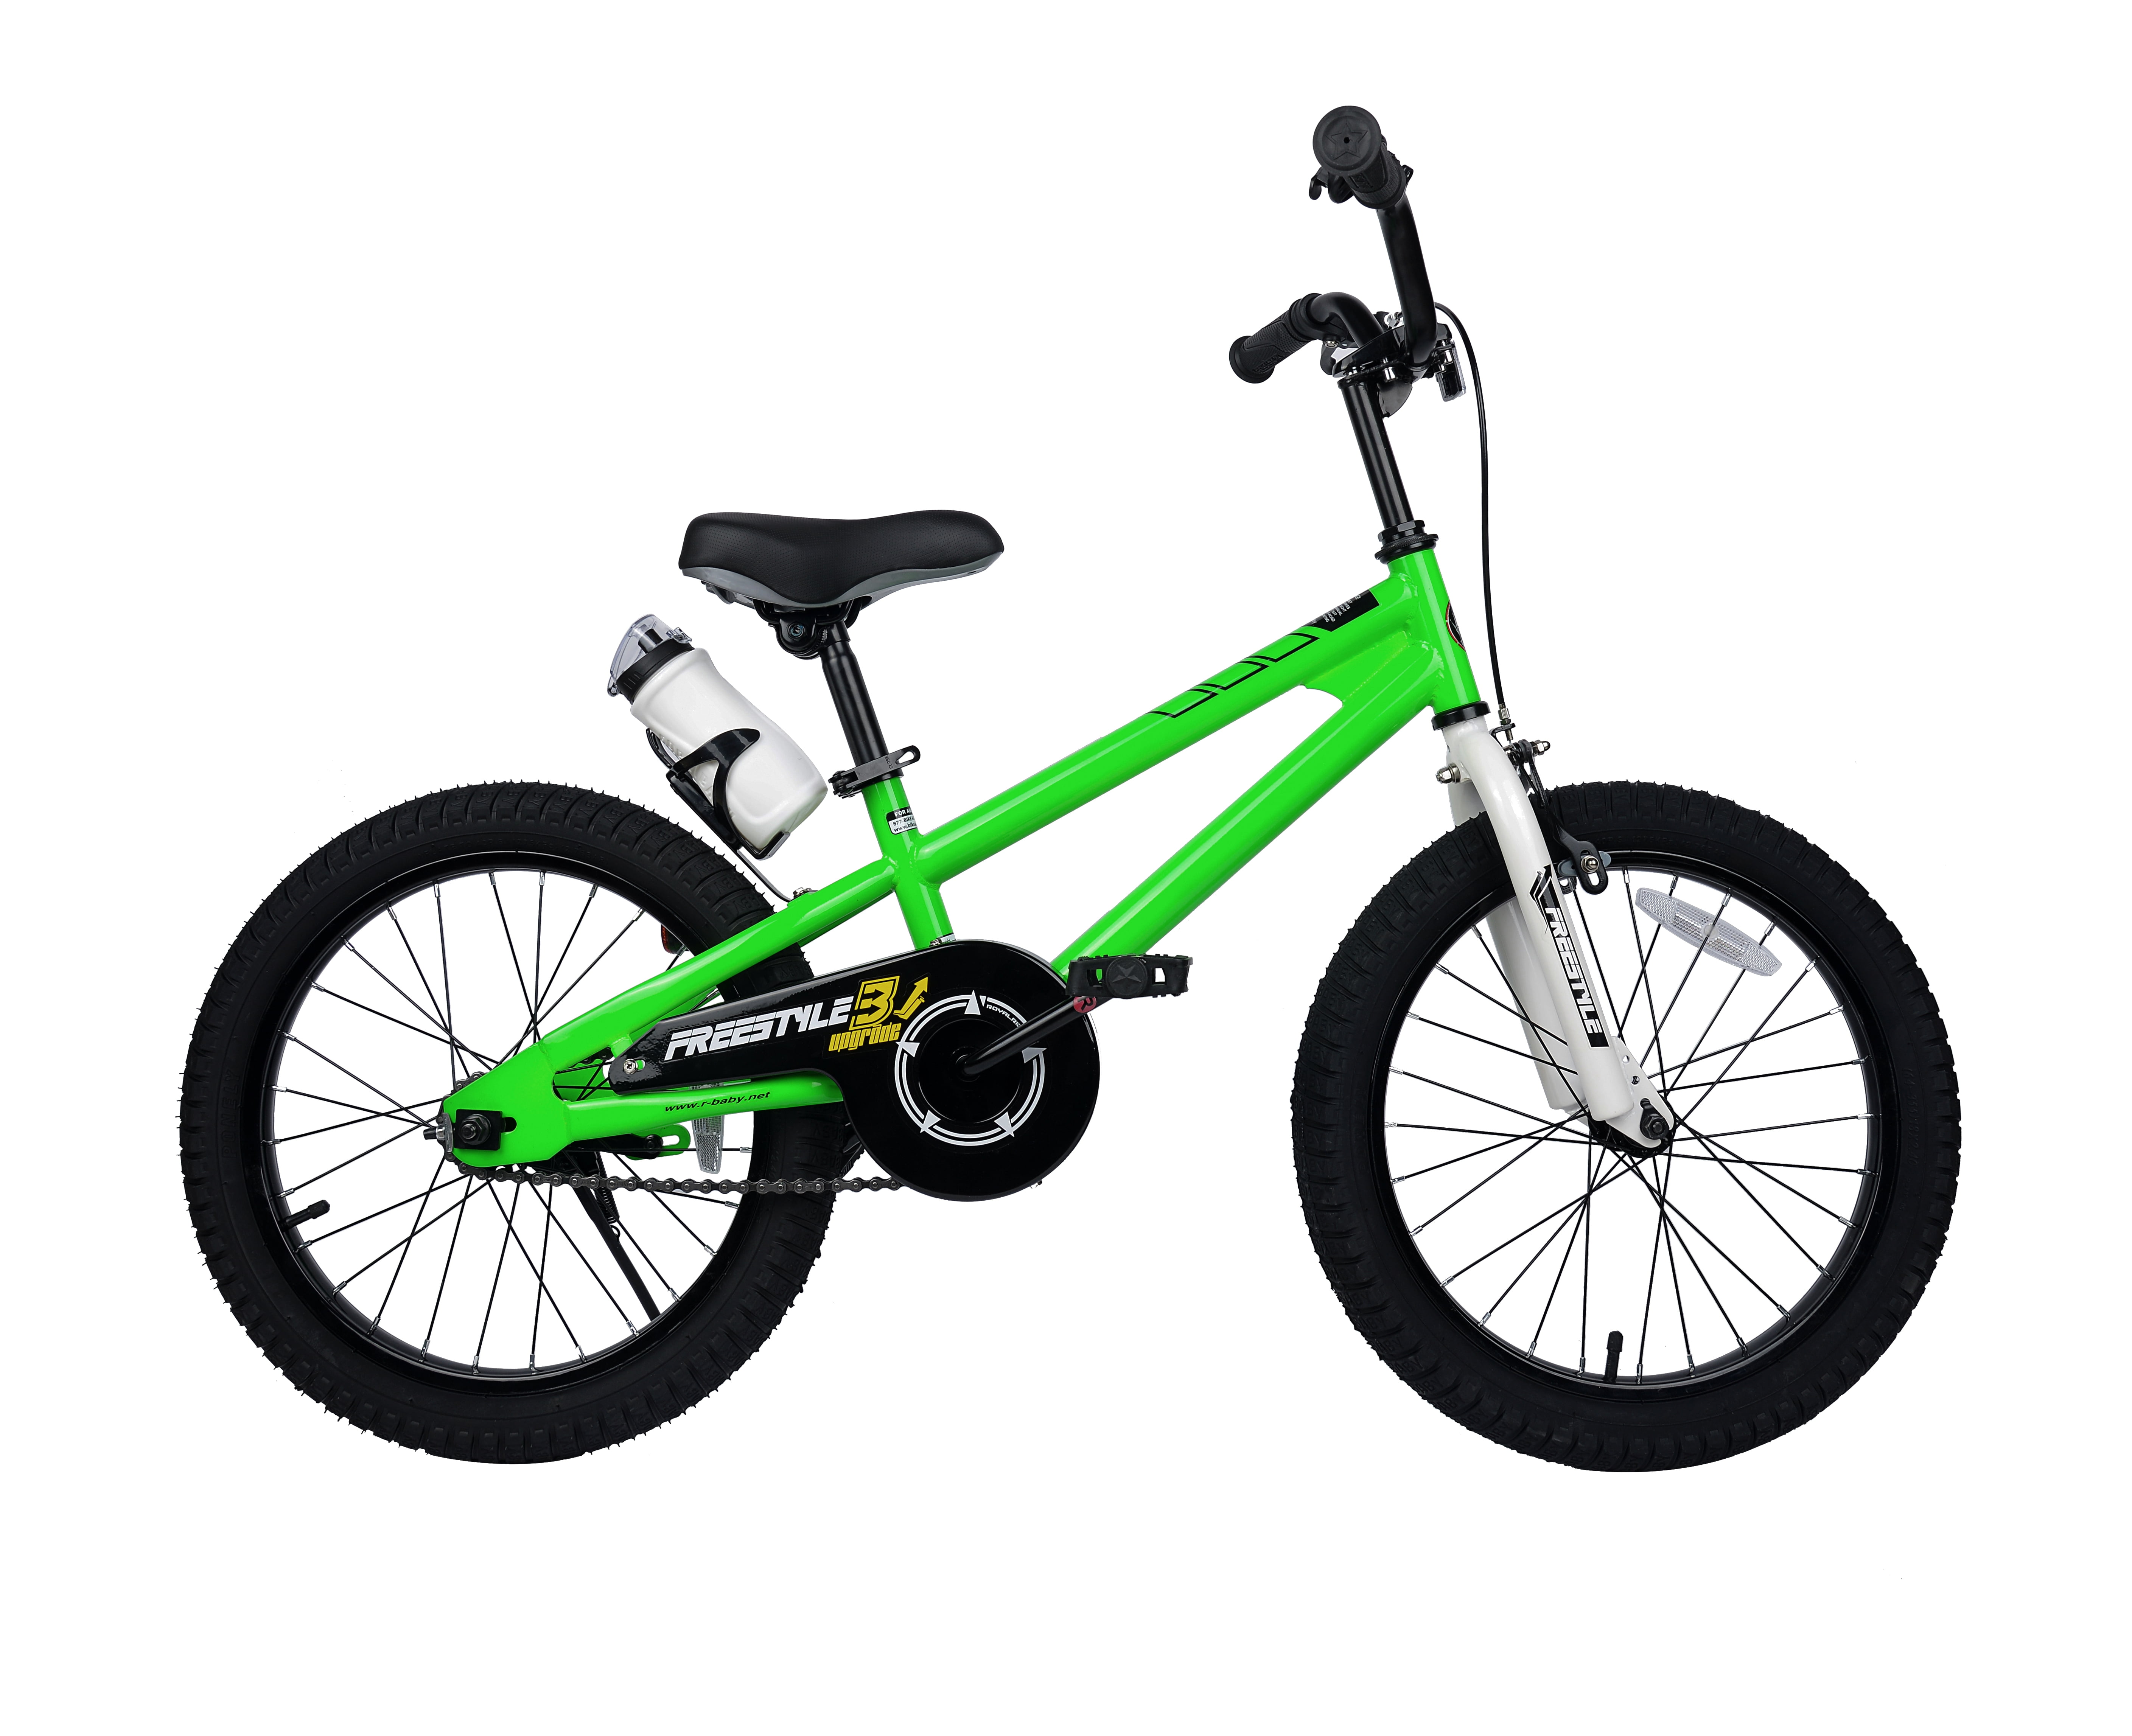 RoyalBaby Freestyle Kids Bike 18 inch Girls and Boys Kids Bicycle Green ...